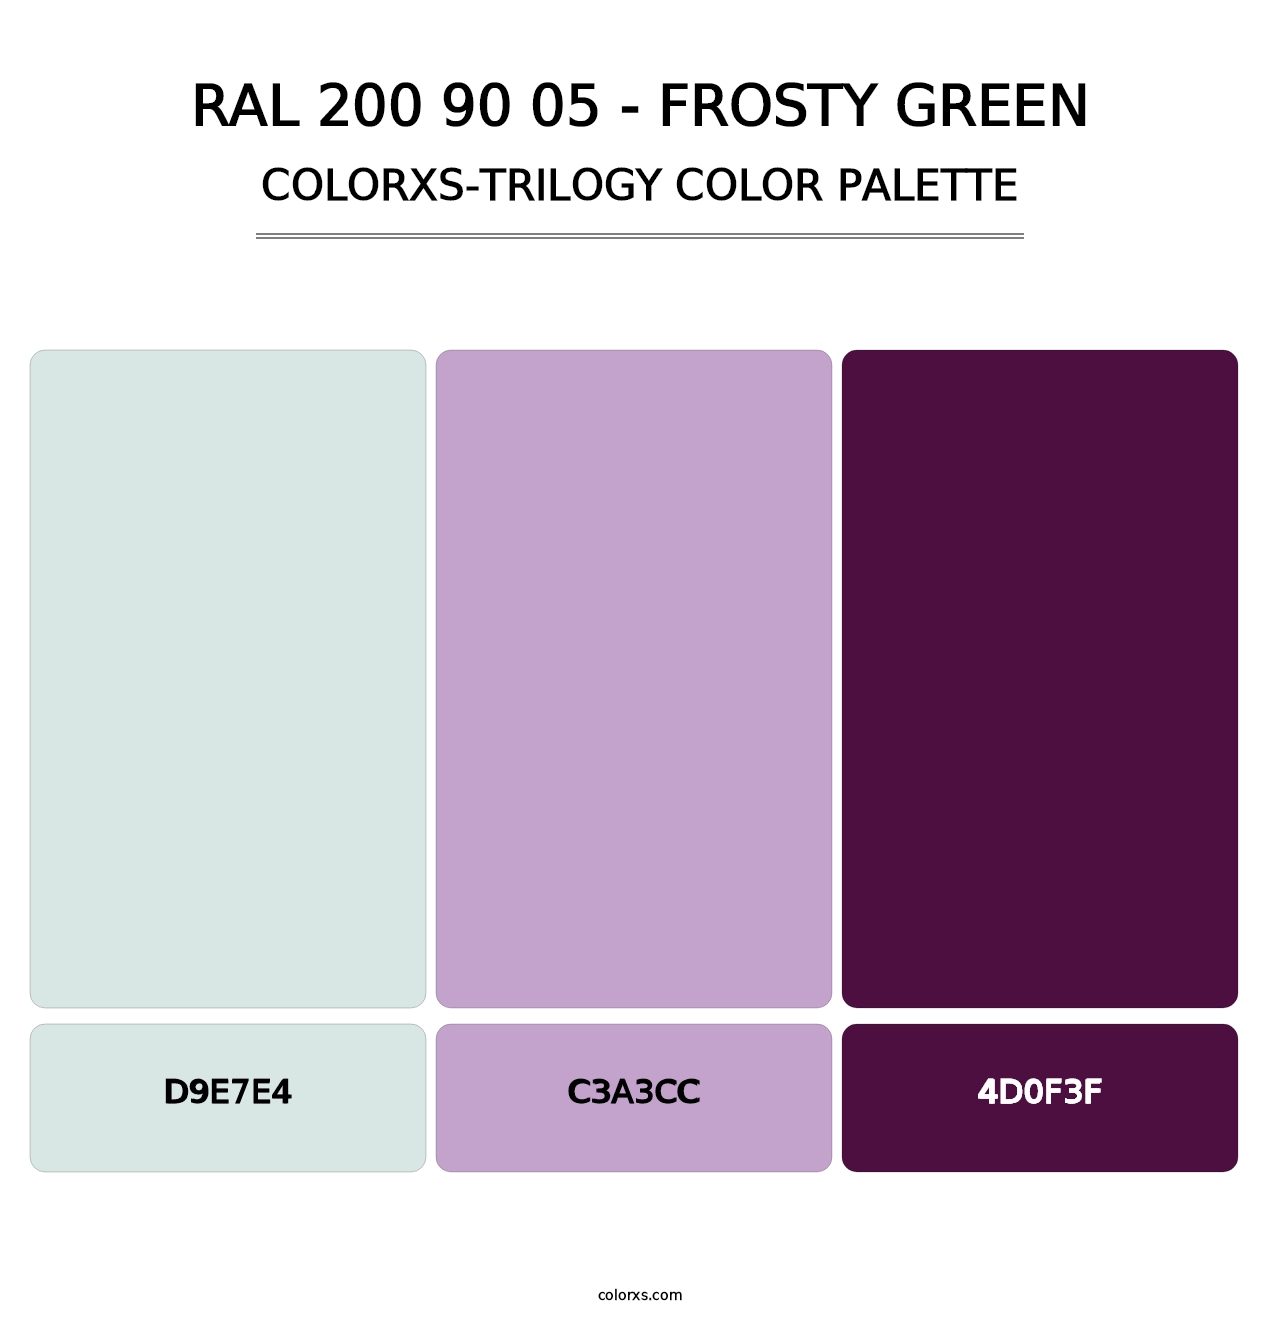 RAL 200 90 05 - Frosty Green - Colorxs Trilogy Palette